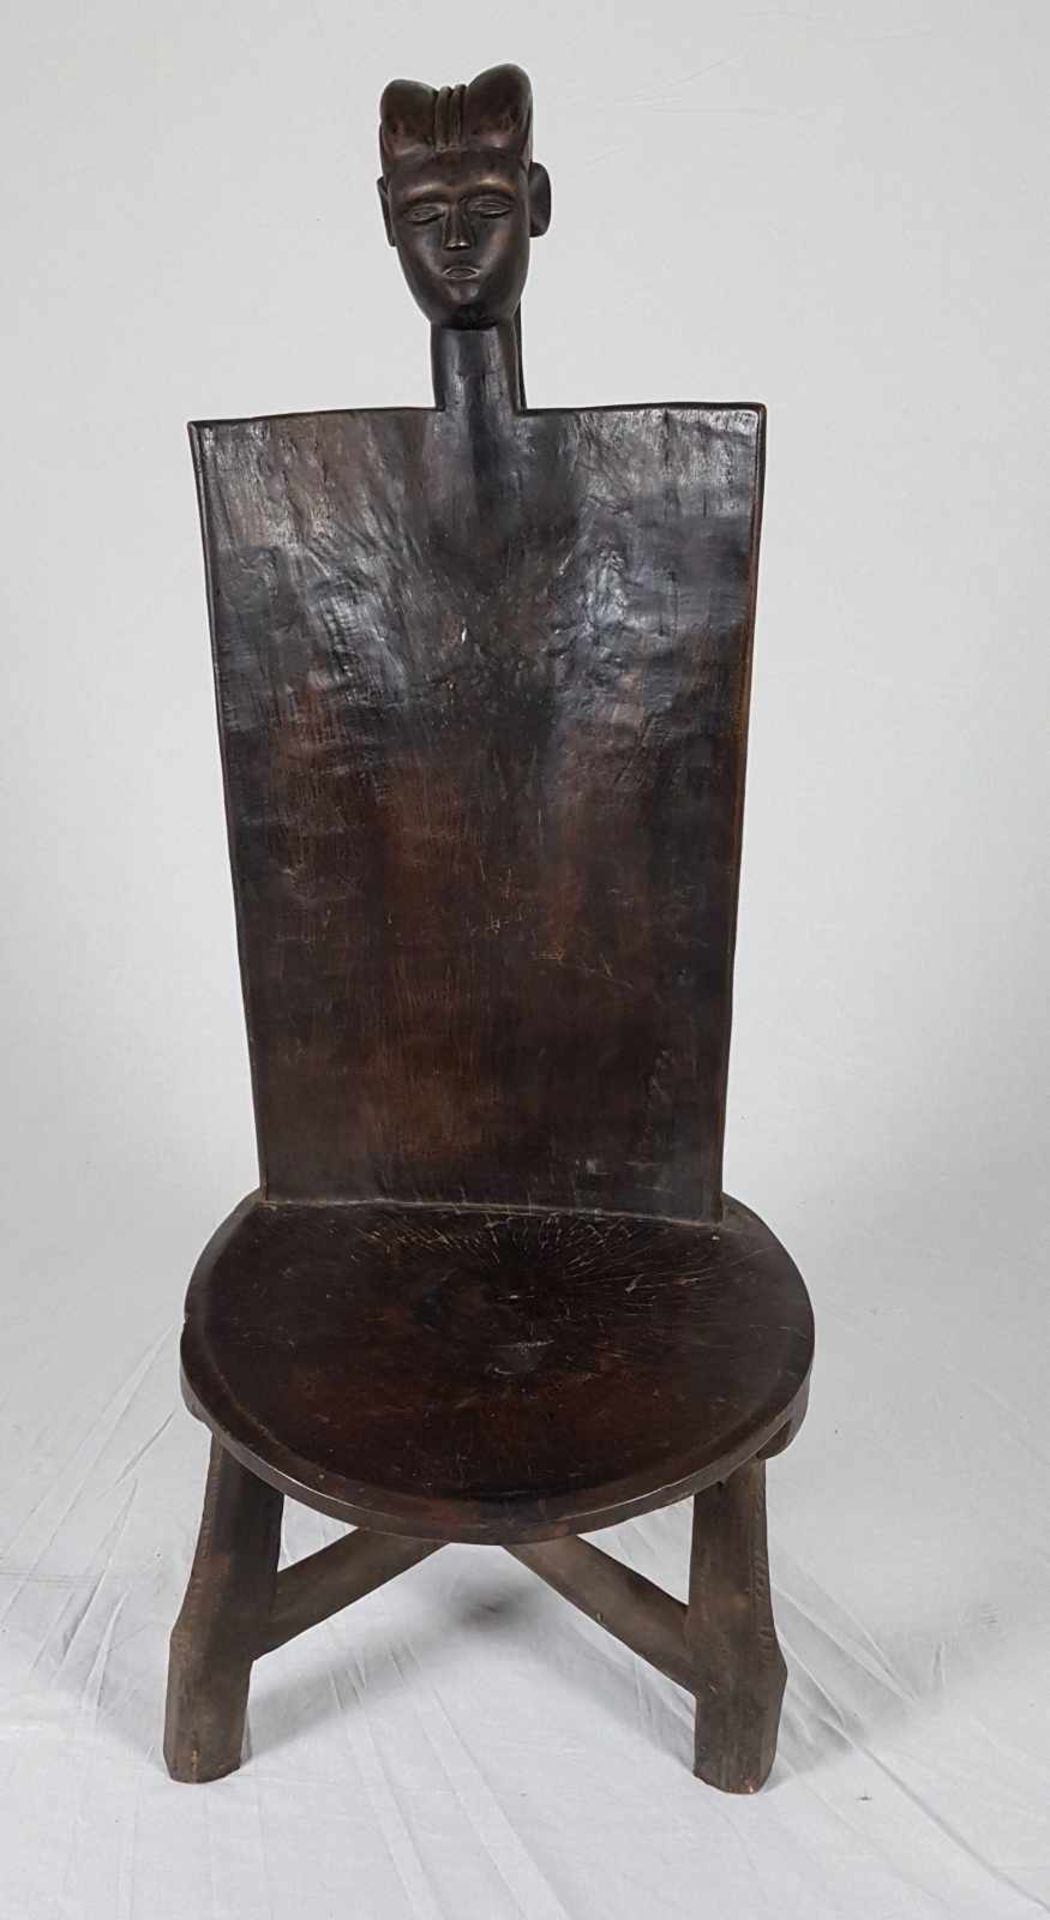 Stuhl des Imperial Chief - Ostafrika,2.Hälfte 20.Jhs,Holz geschnitzt,ca.140x55cm,Gewicht ca.14kg